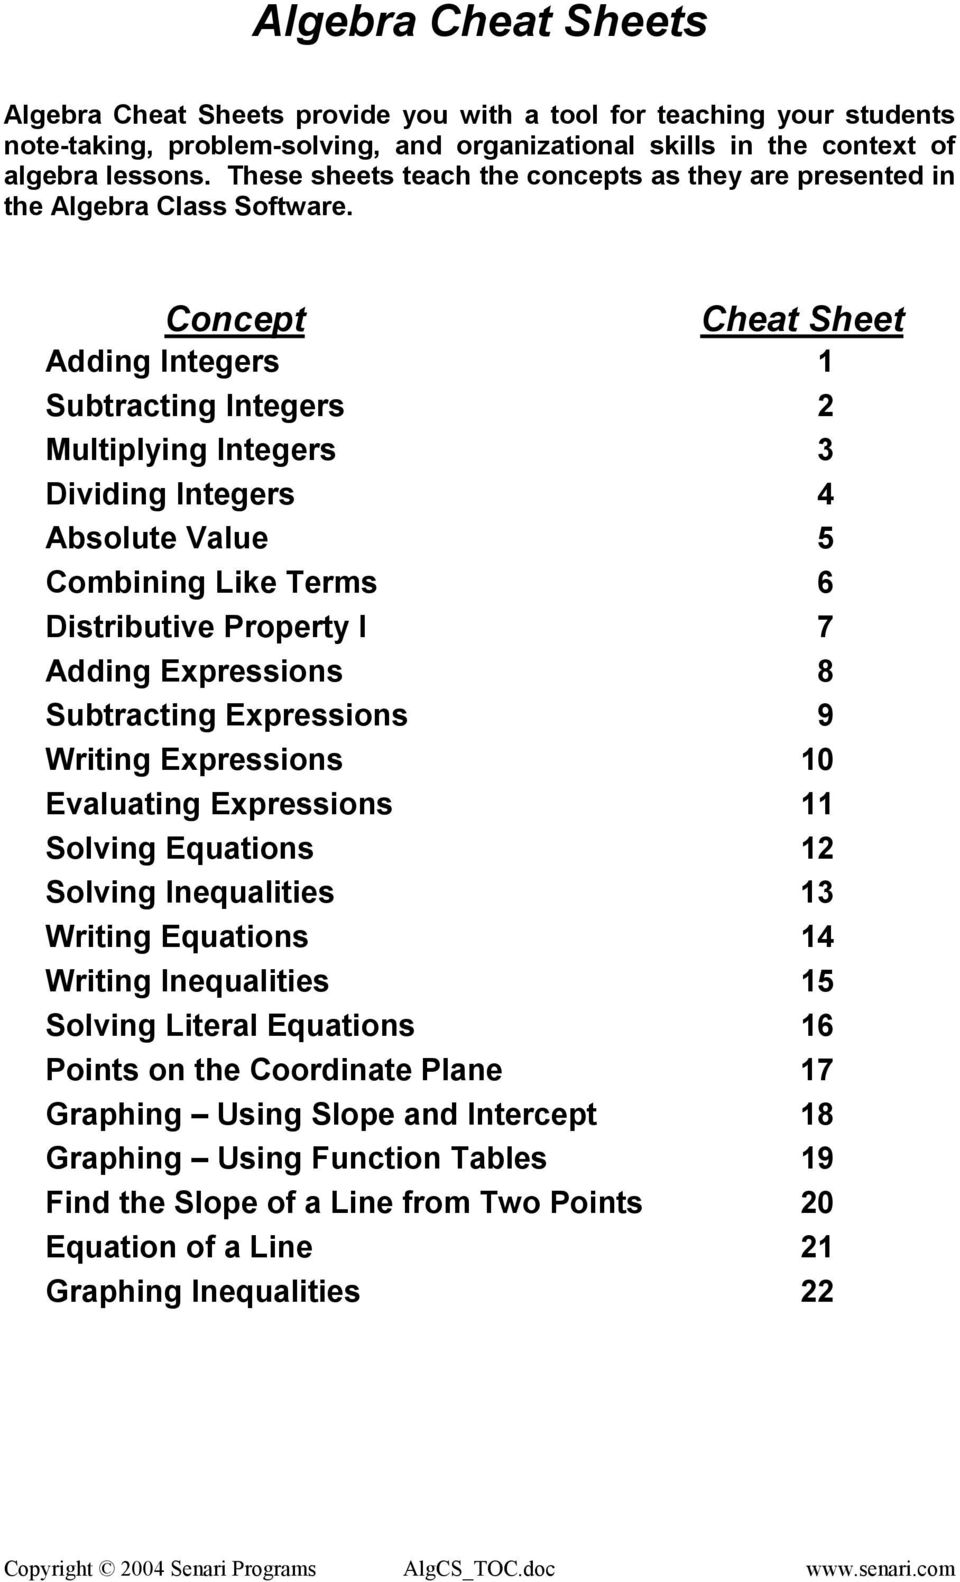 Algebra Cheat Sheets Pdf Free Download